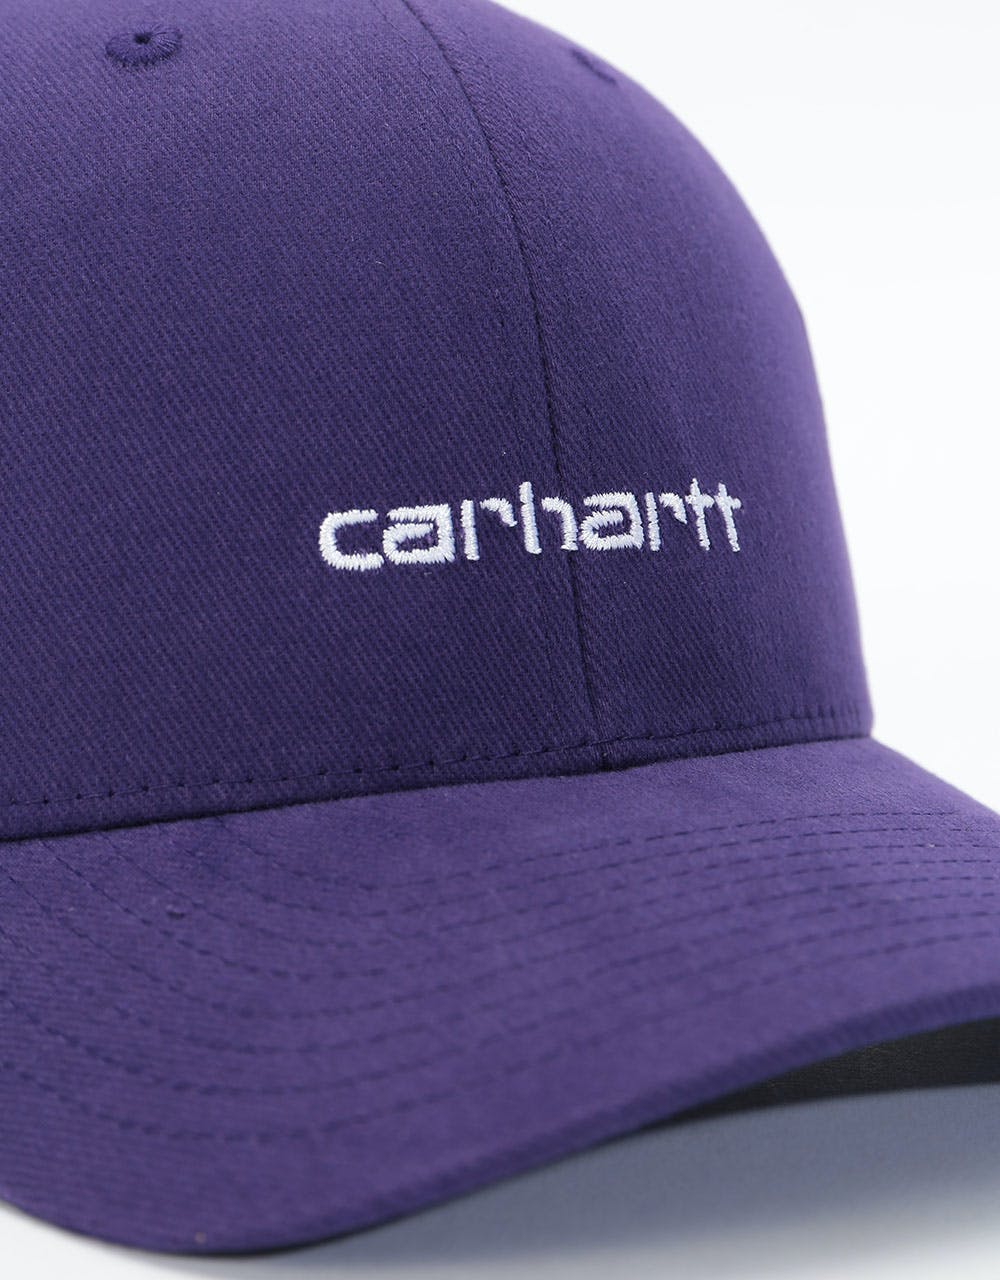 Carhartt WIP Script Cap - Royal Violet/White